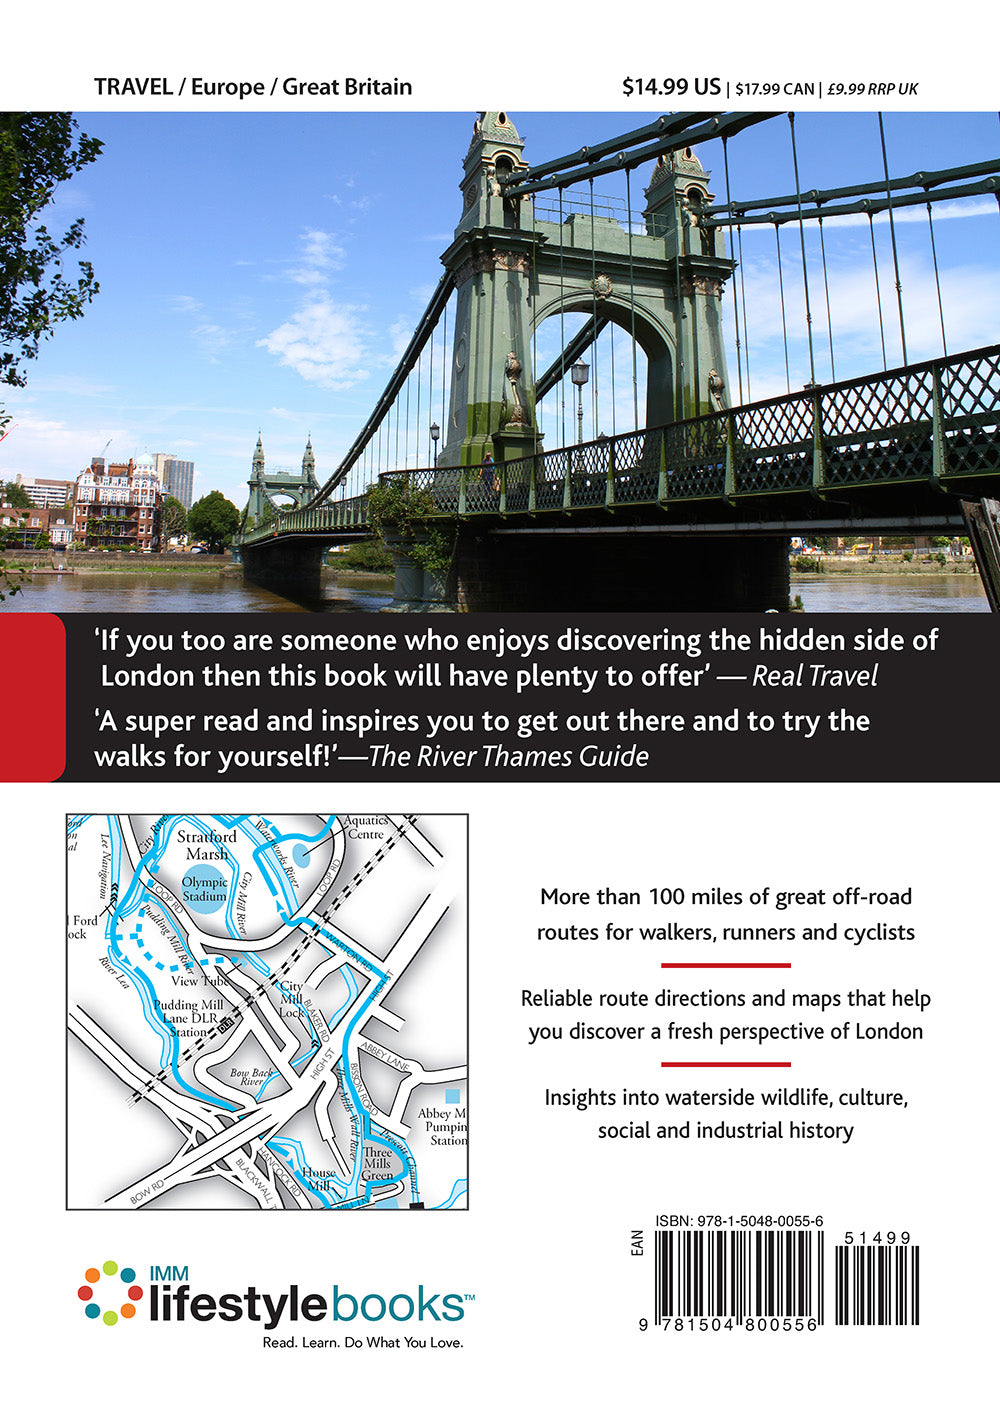 Walking London's Waterways, Updated Edition